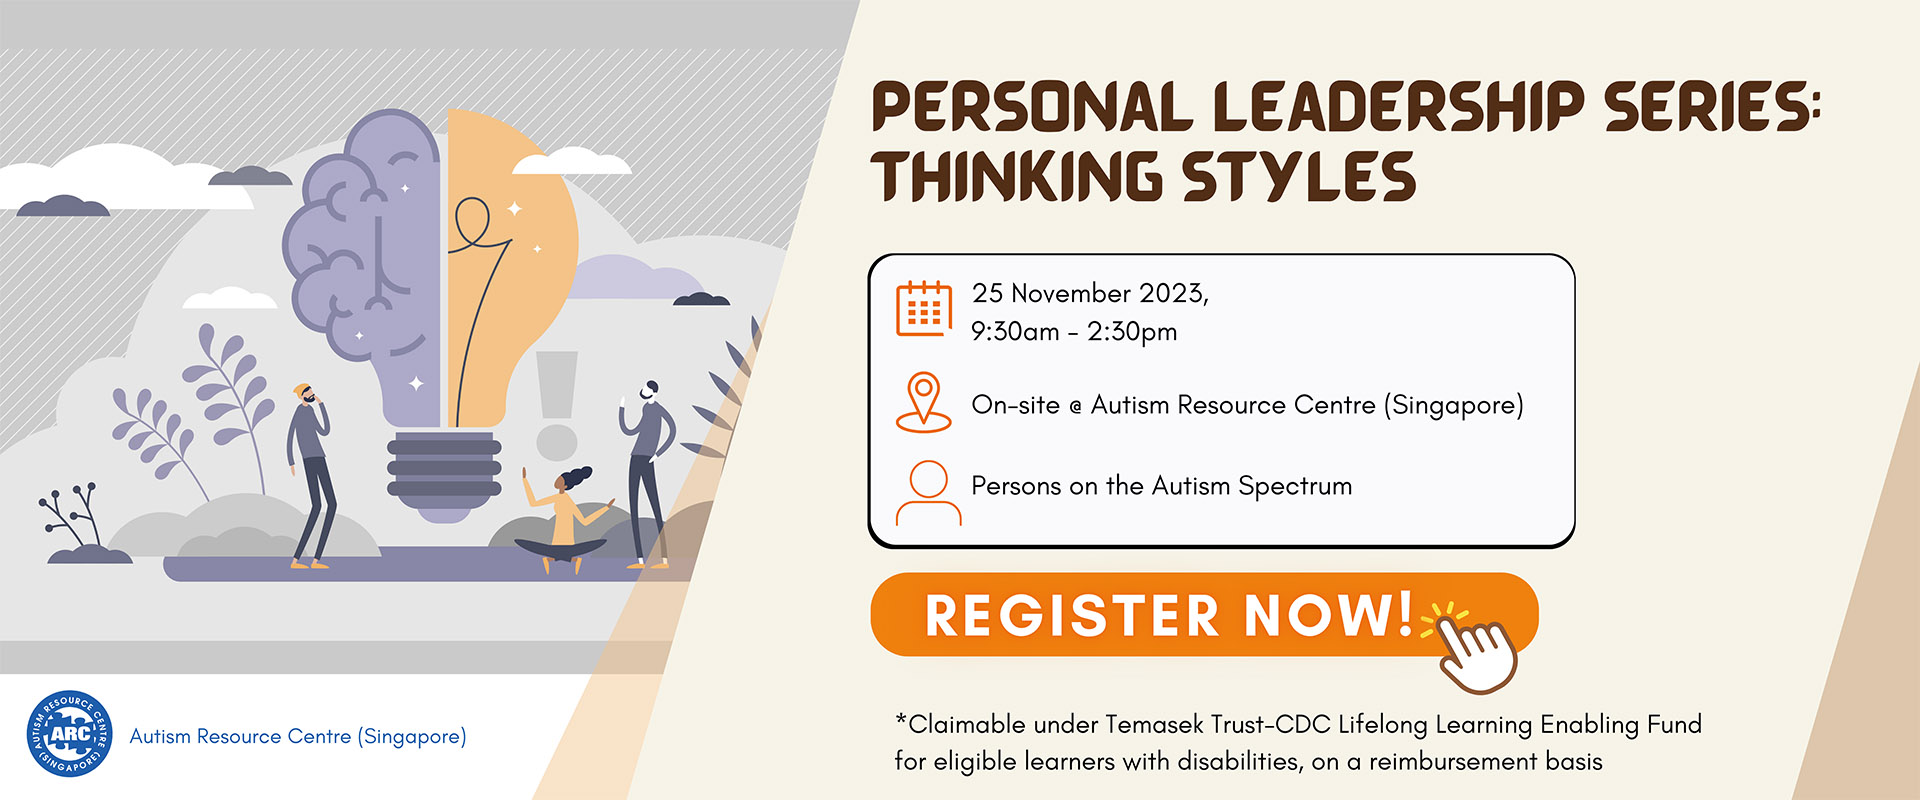 Personal Leadership Series: Thinking Styles